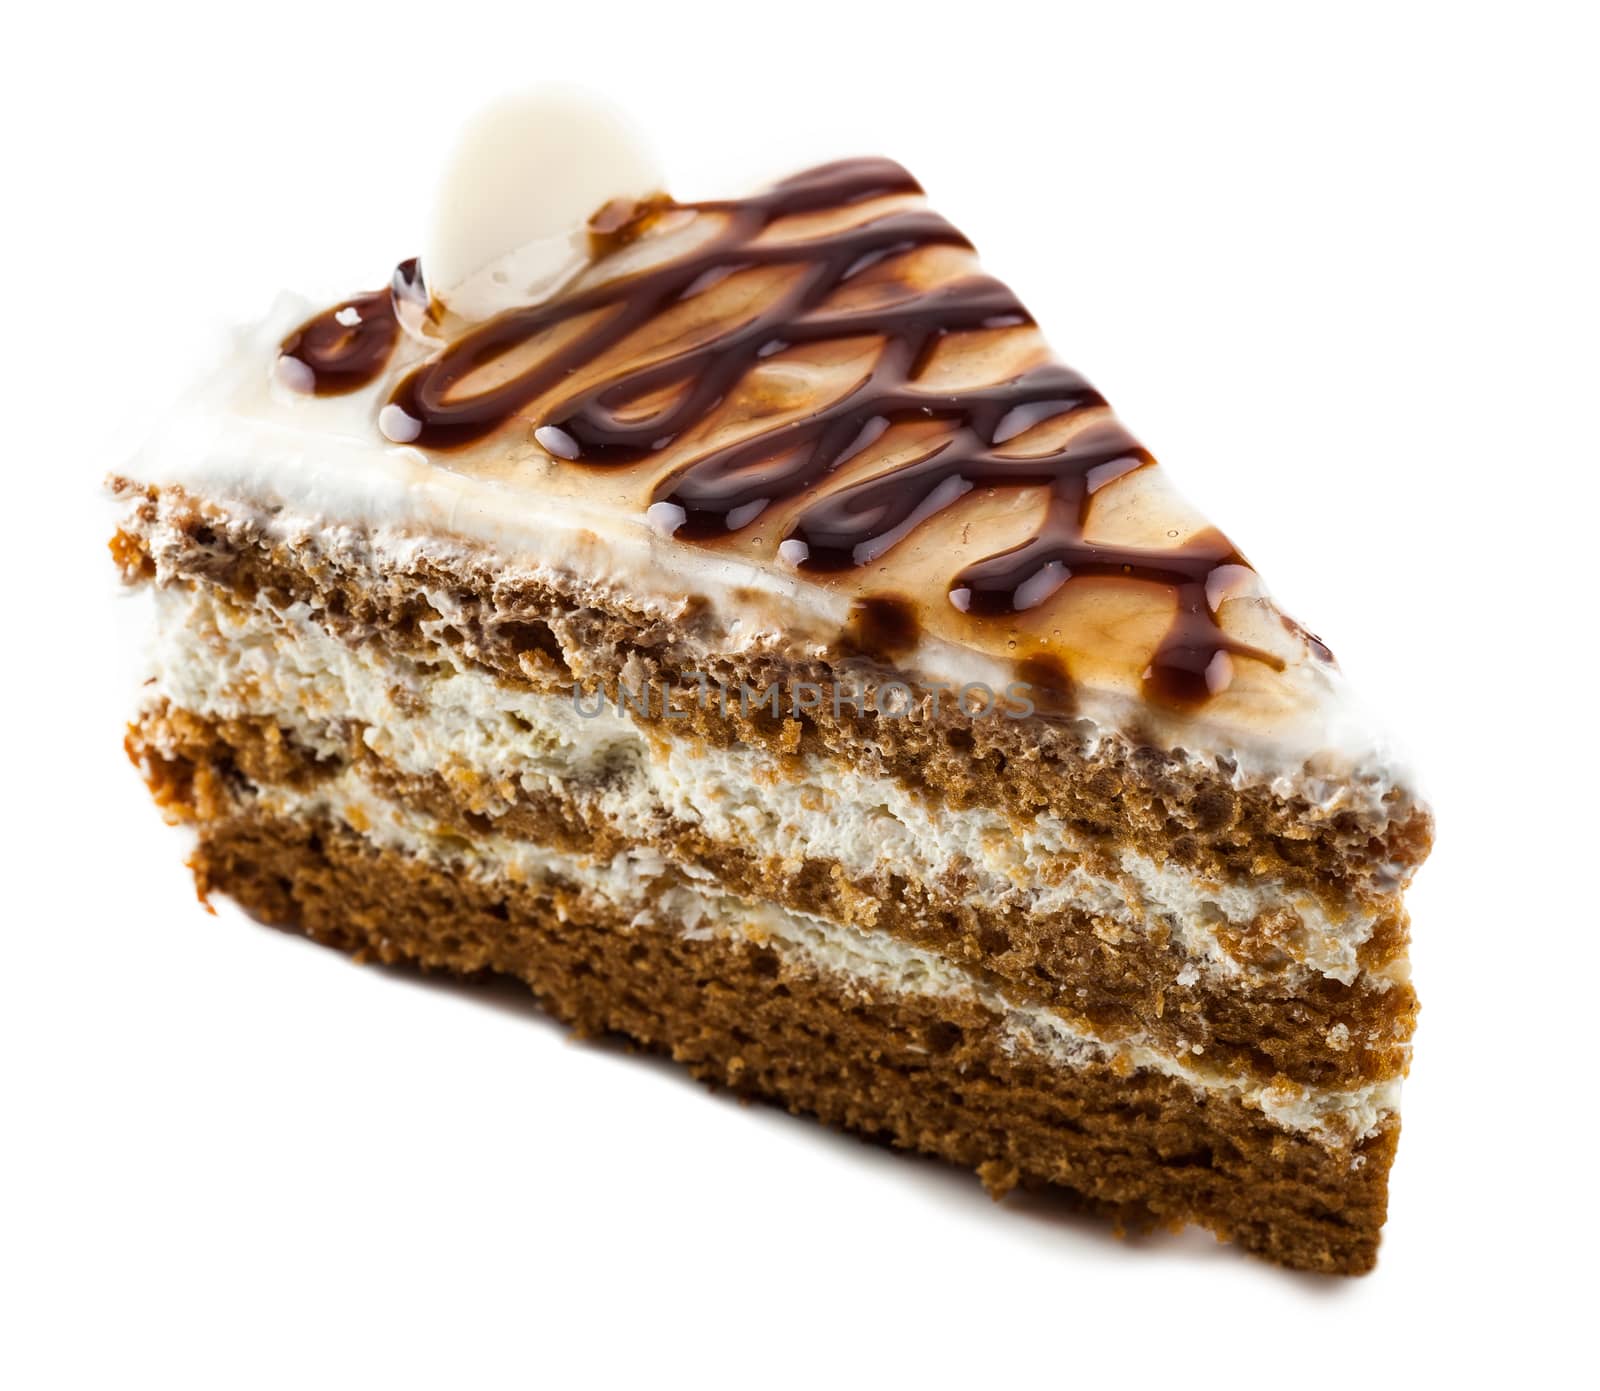 slice of chocolate cake on a white background isolated